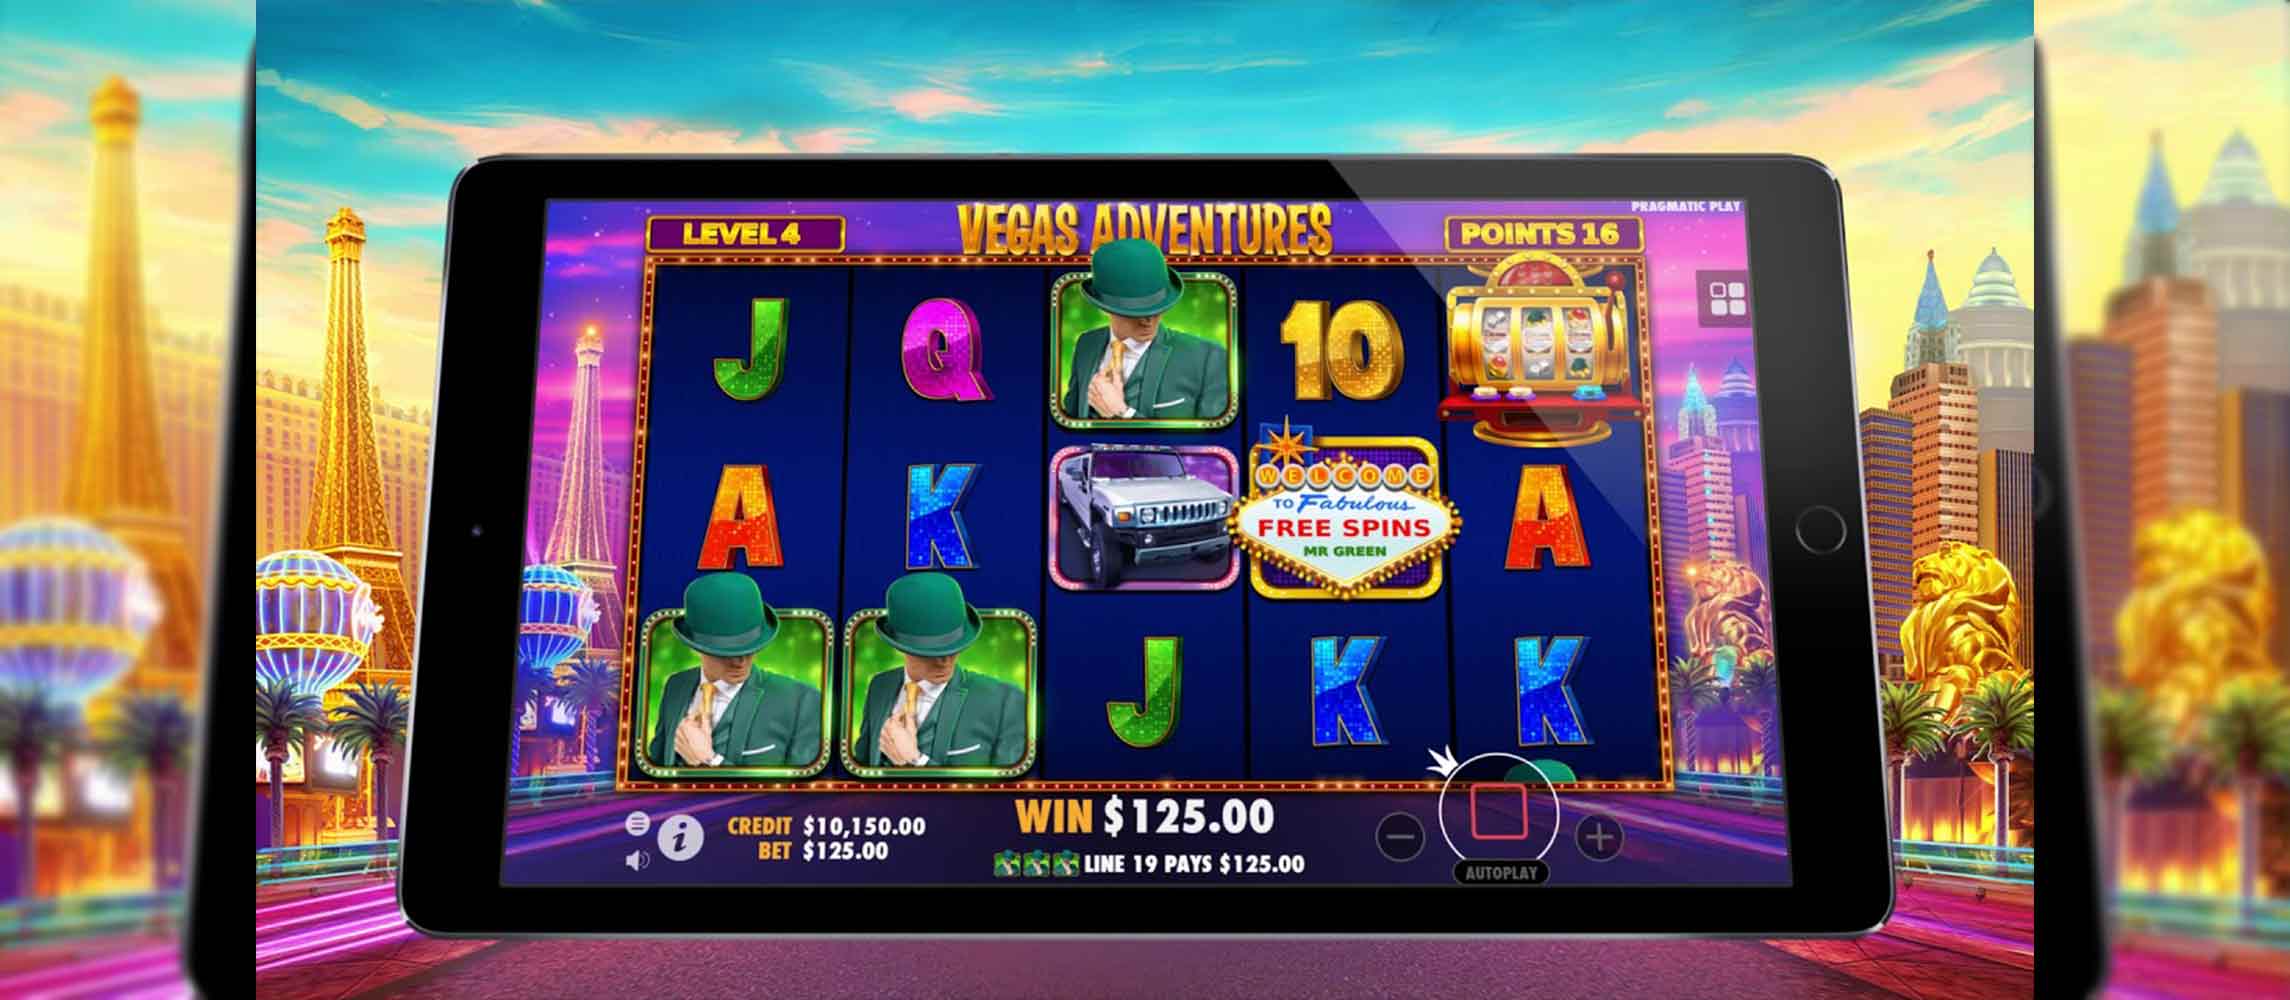 Vegas Adventures by Pragmatic Play